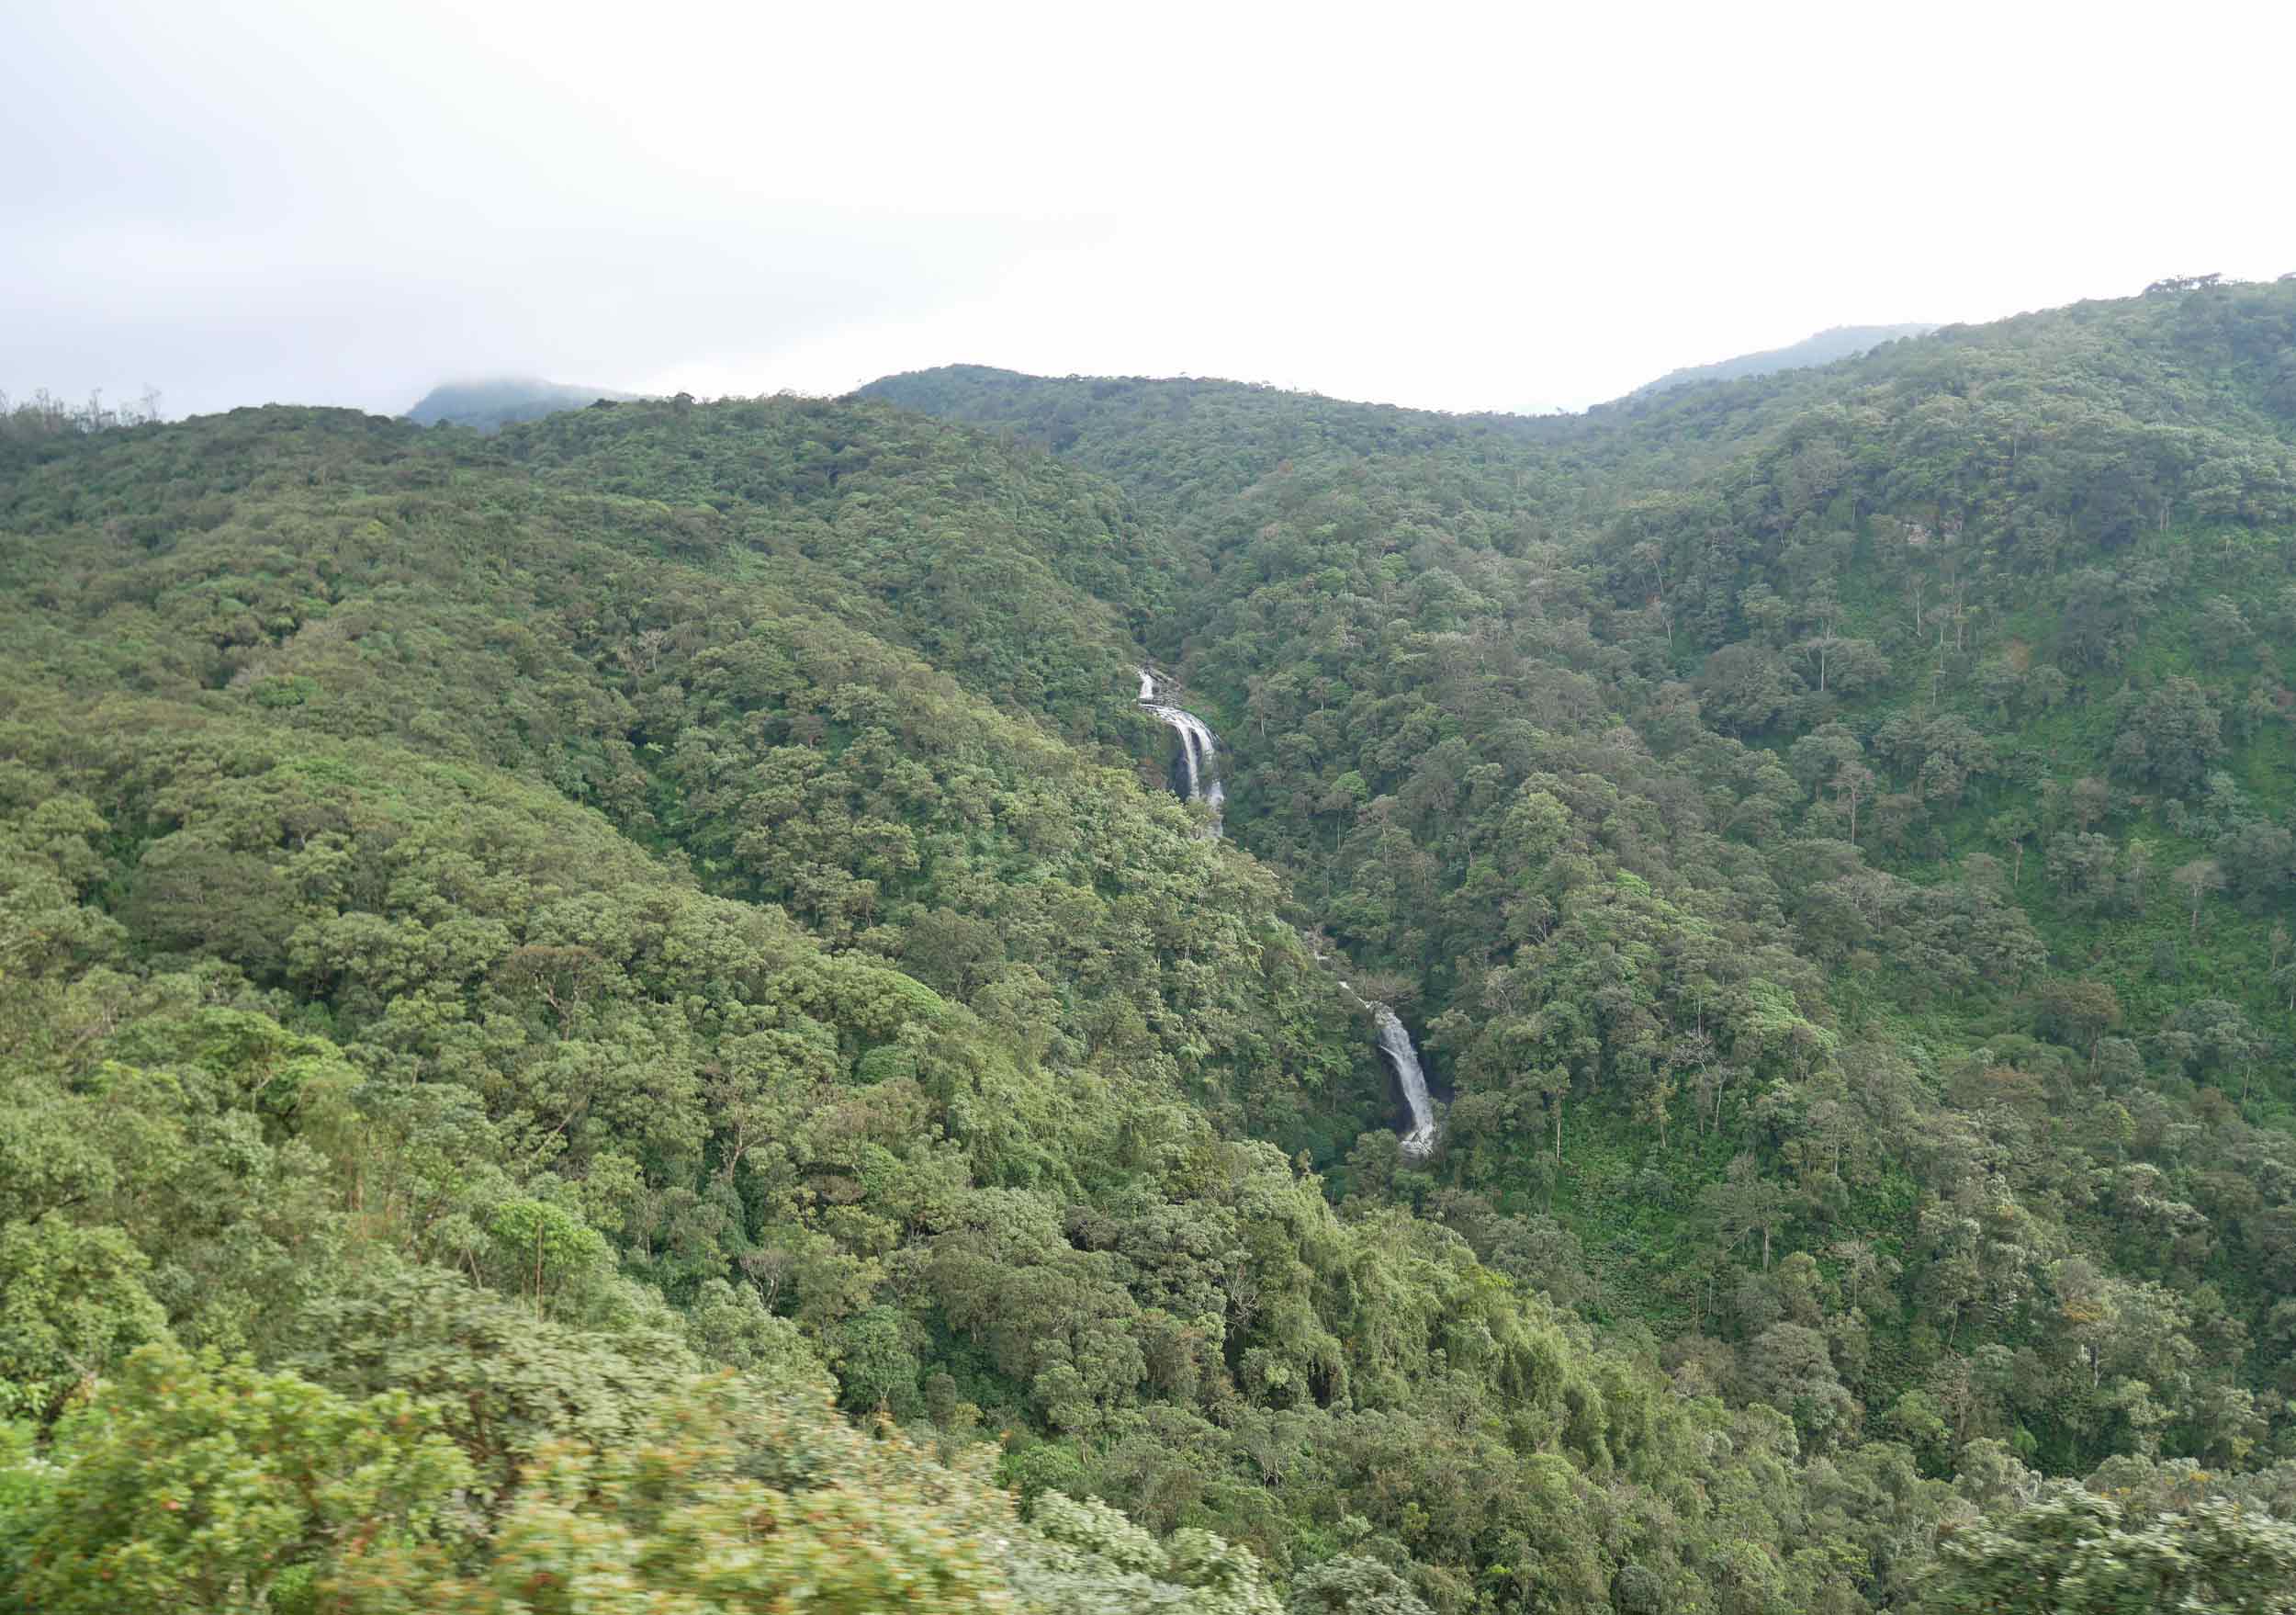  Waterfalls flowed a-plenty in this lush, verdant land. 